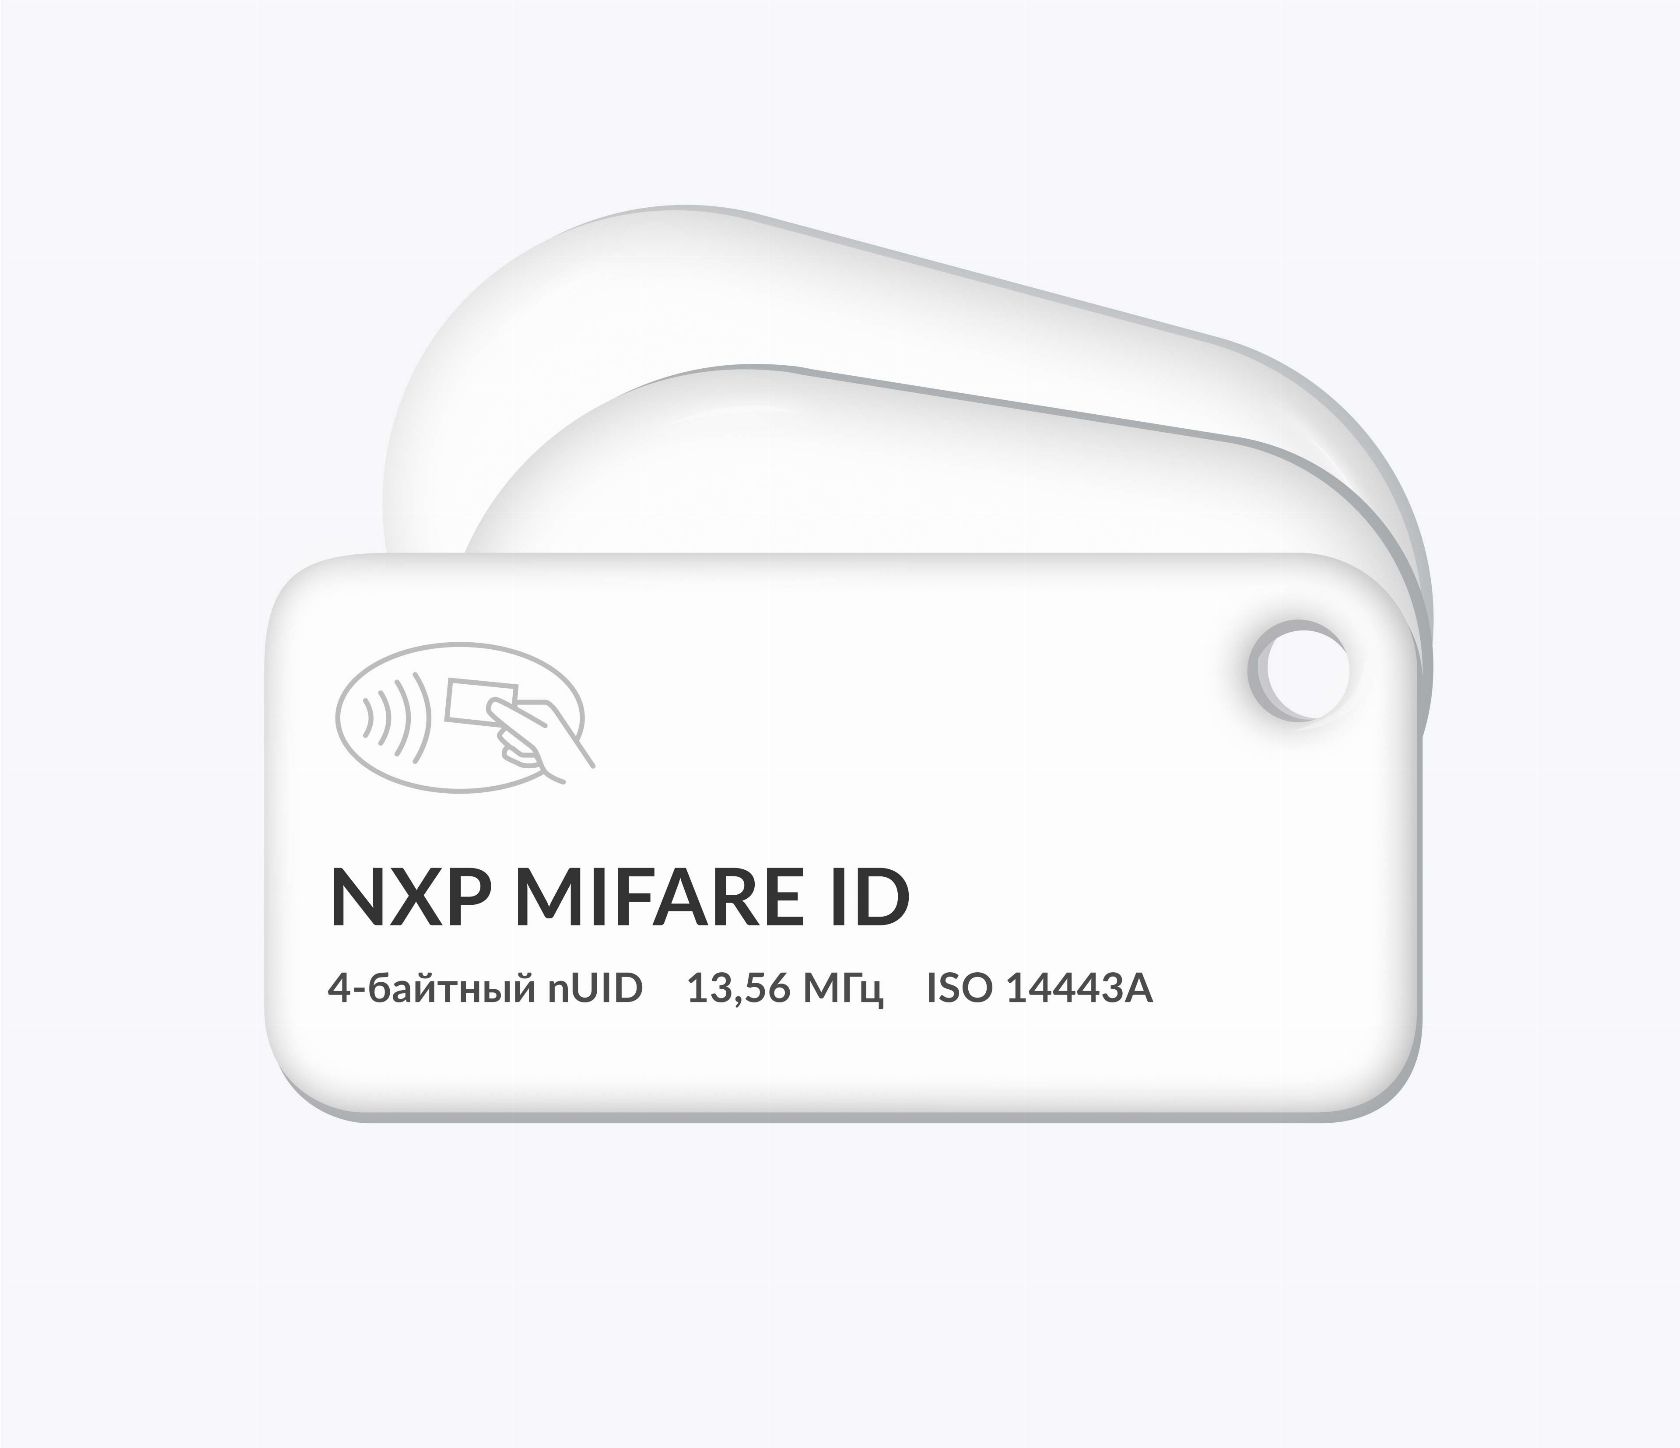 RFID-брелоки NEOKEY® с чипом NXP MIFARE ID 4 byte nUID и вашим логотипом